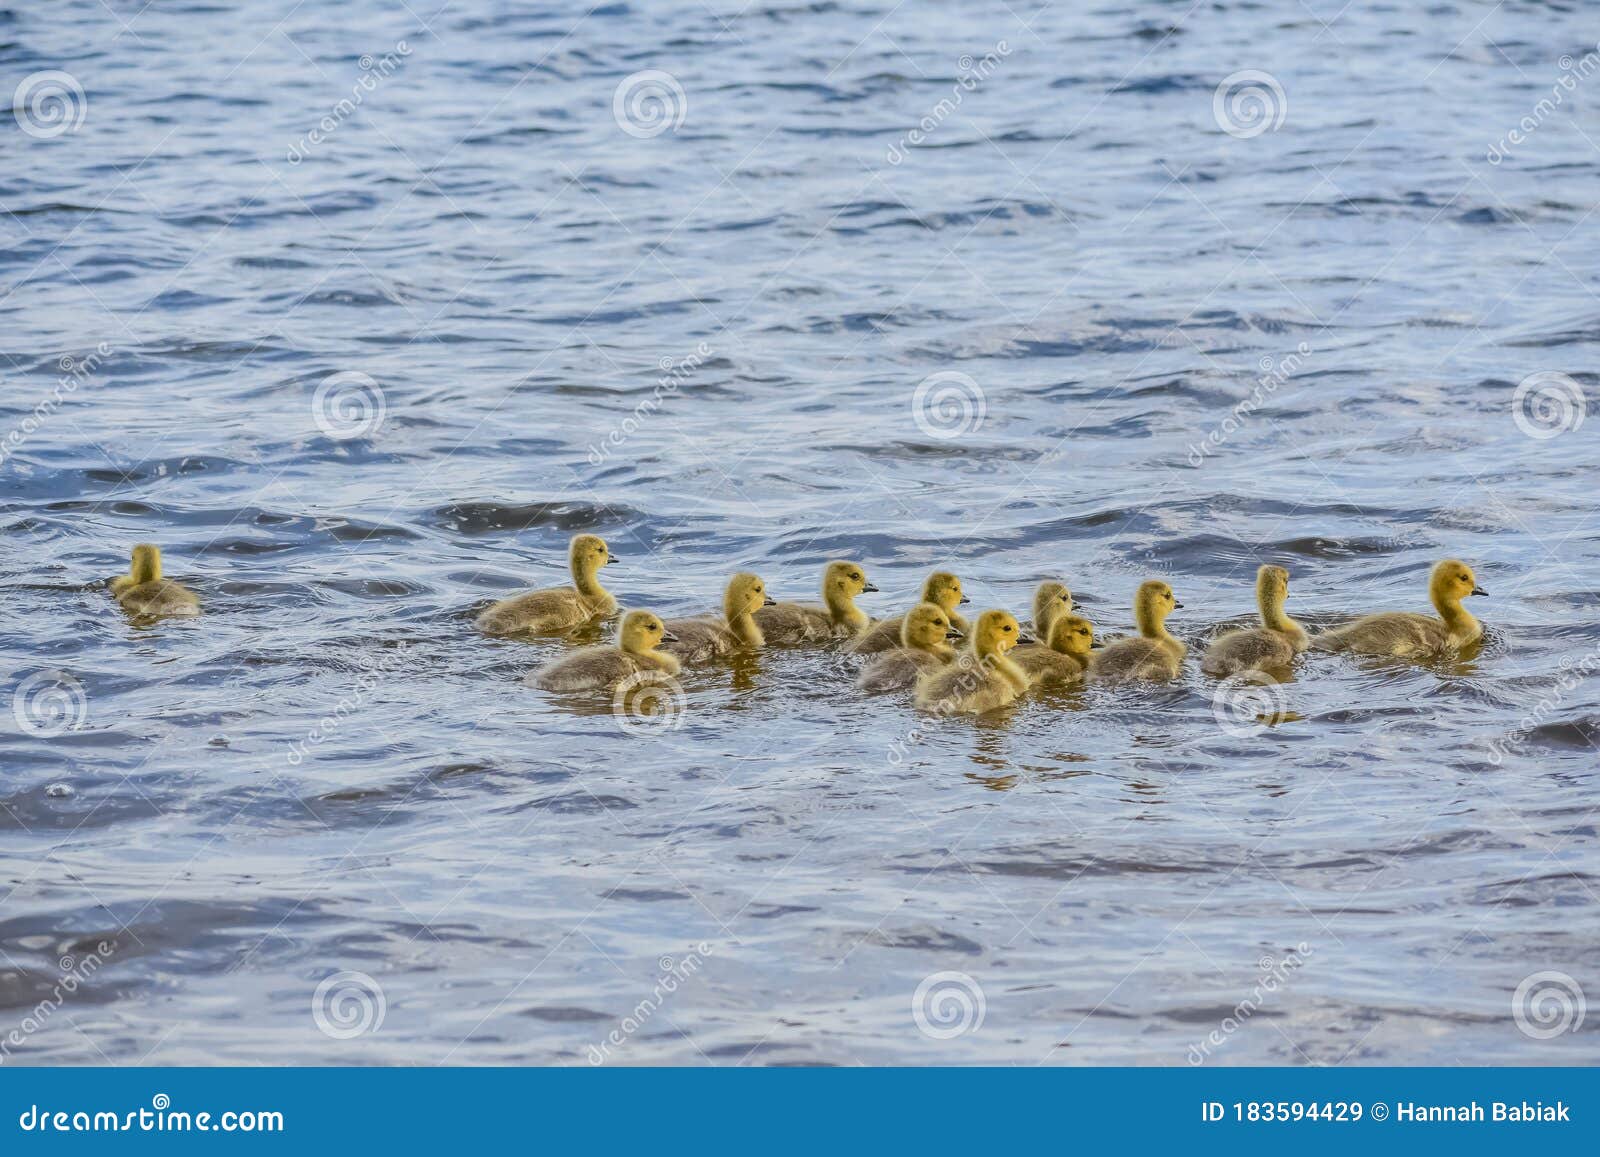 baby goslings swimming in pell lake